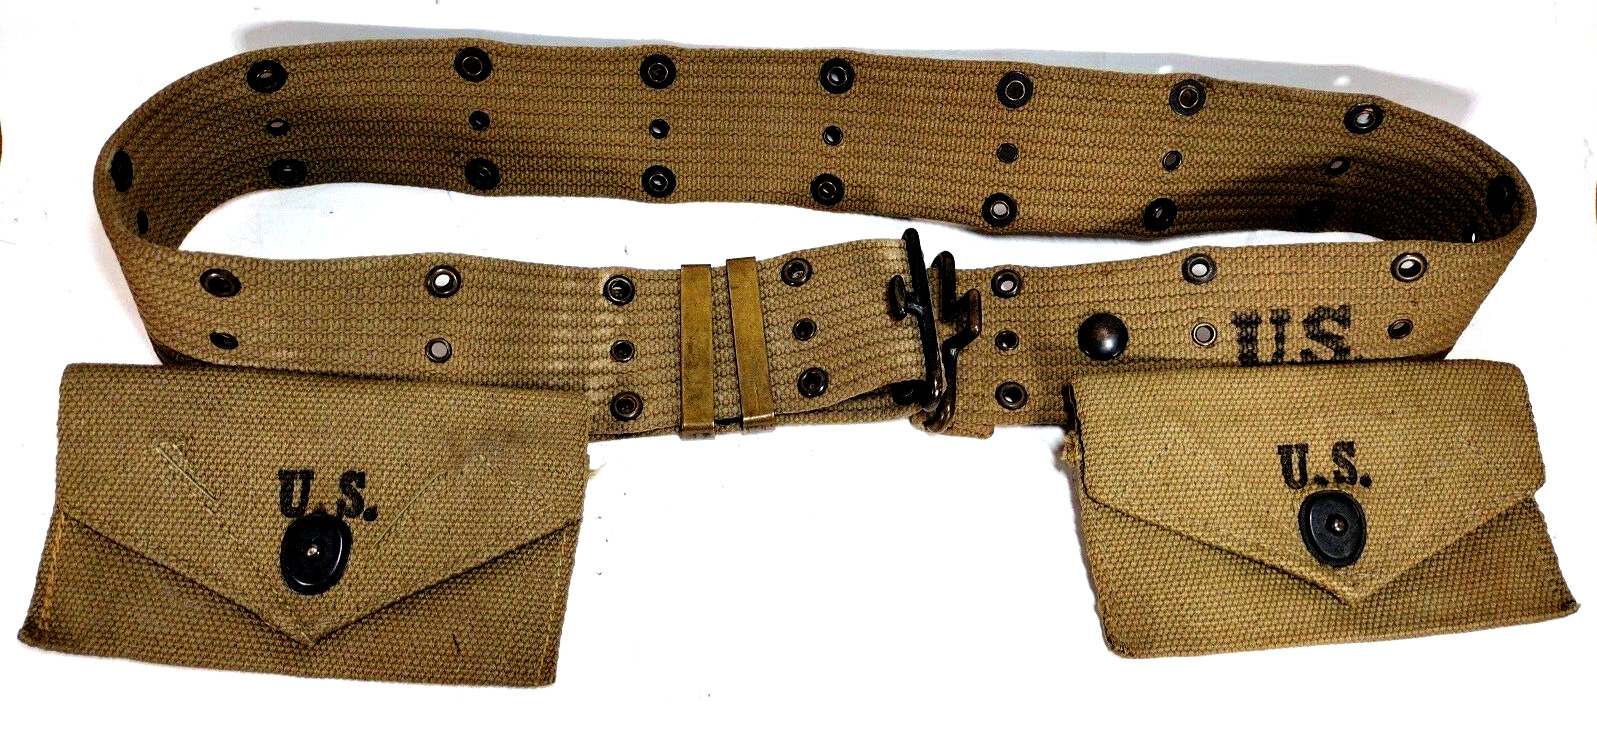 Authentic 1942 World War II U.S. Army Khaki Belt w Bandage and Ammo Pouches, USA